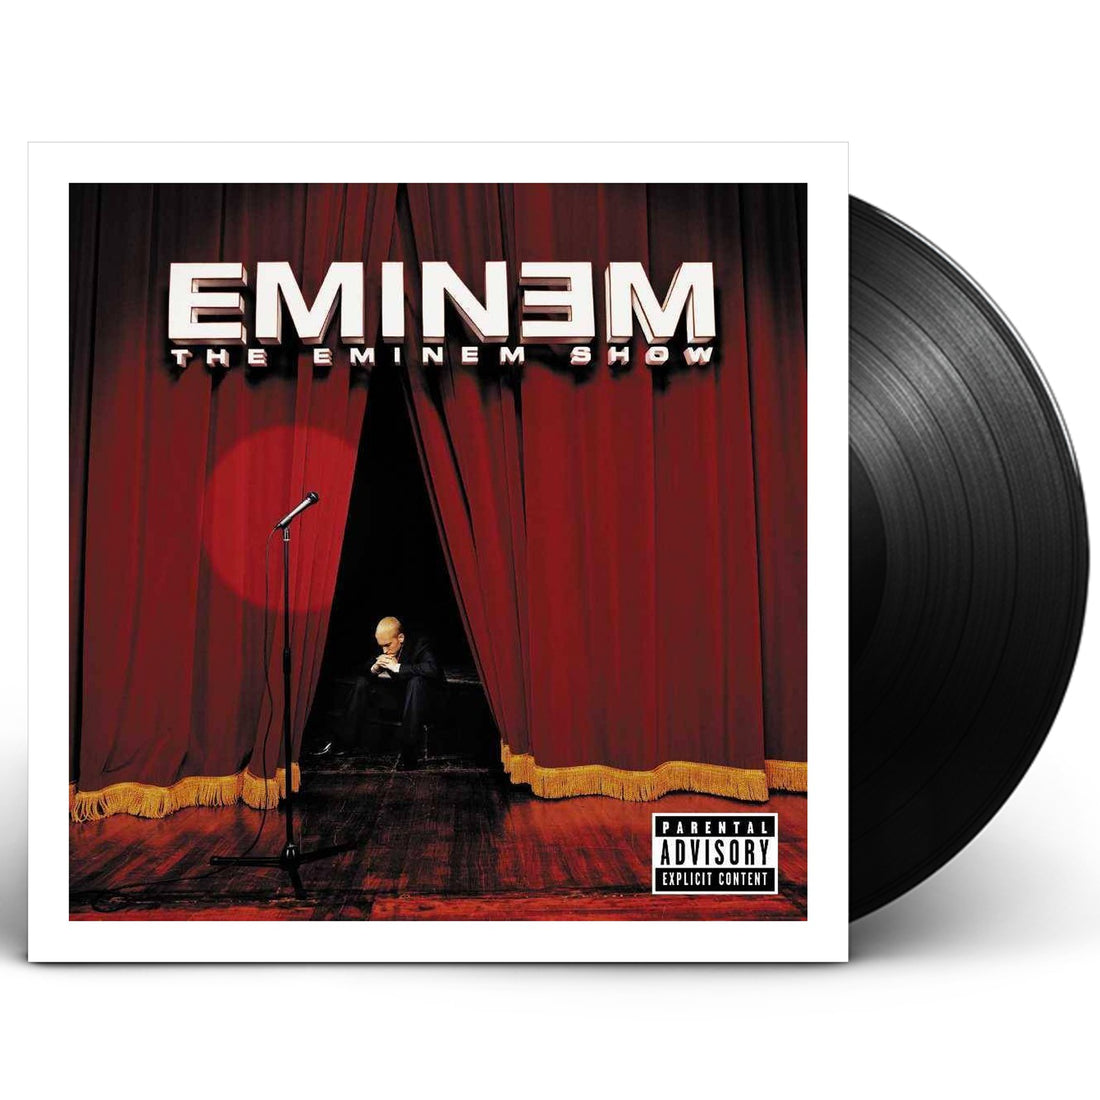 Eminem "Eminem Show" 2xLP